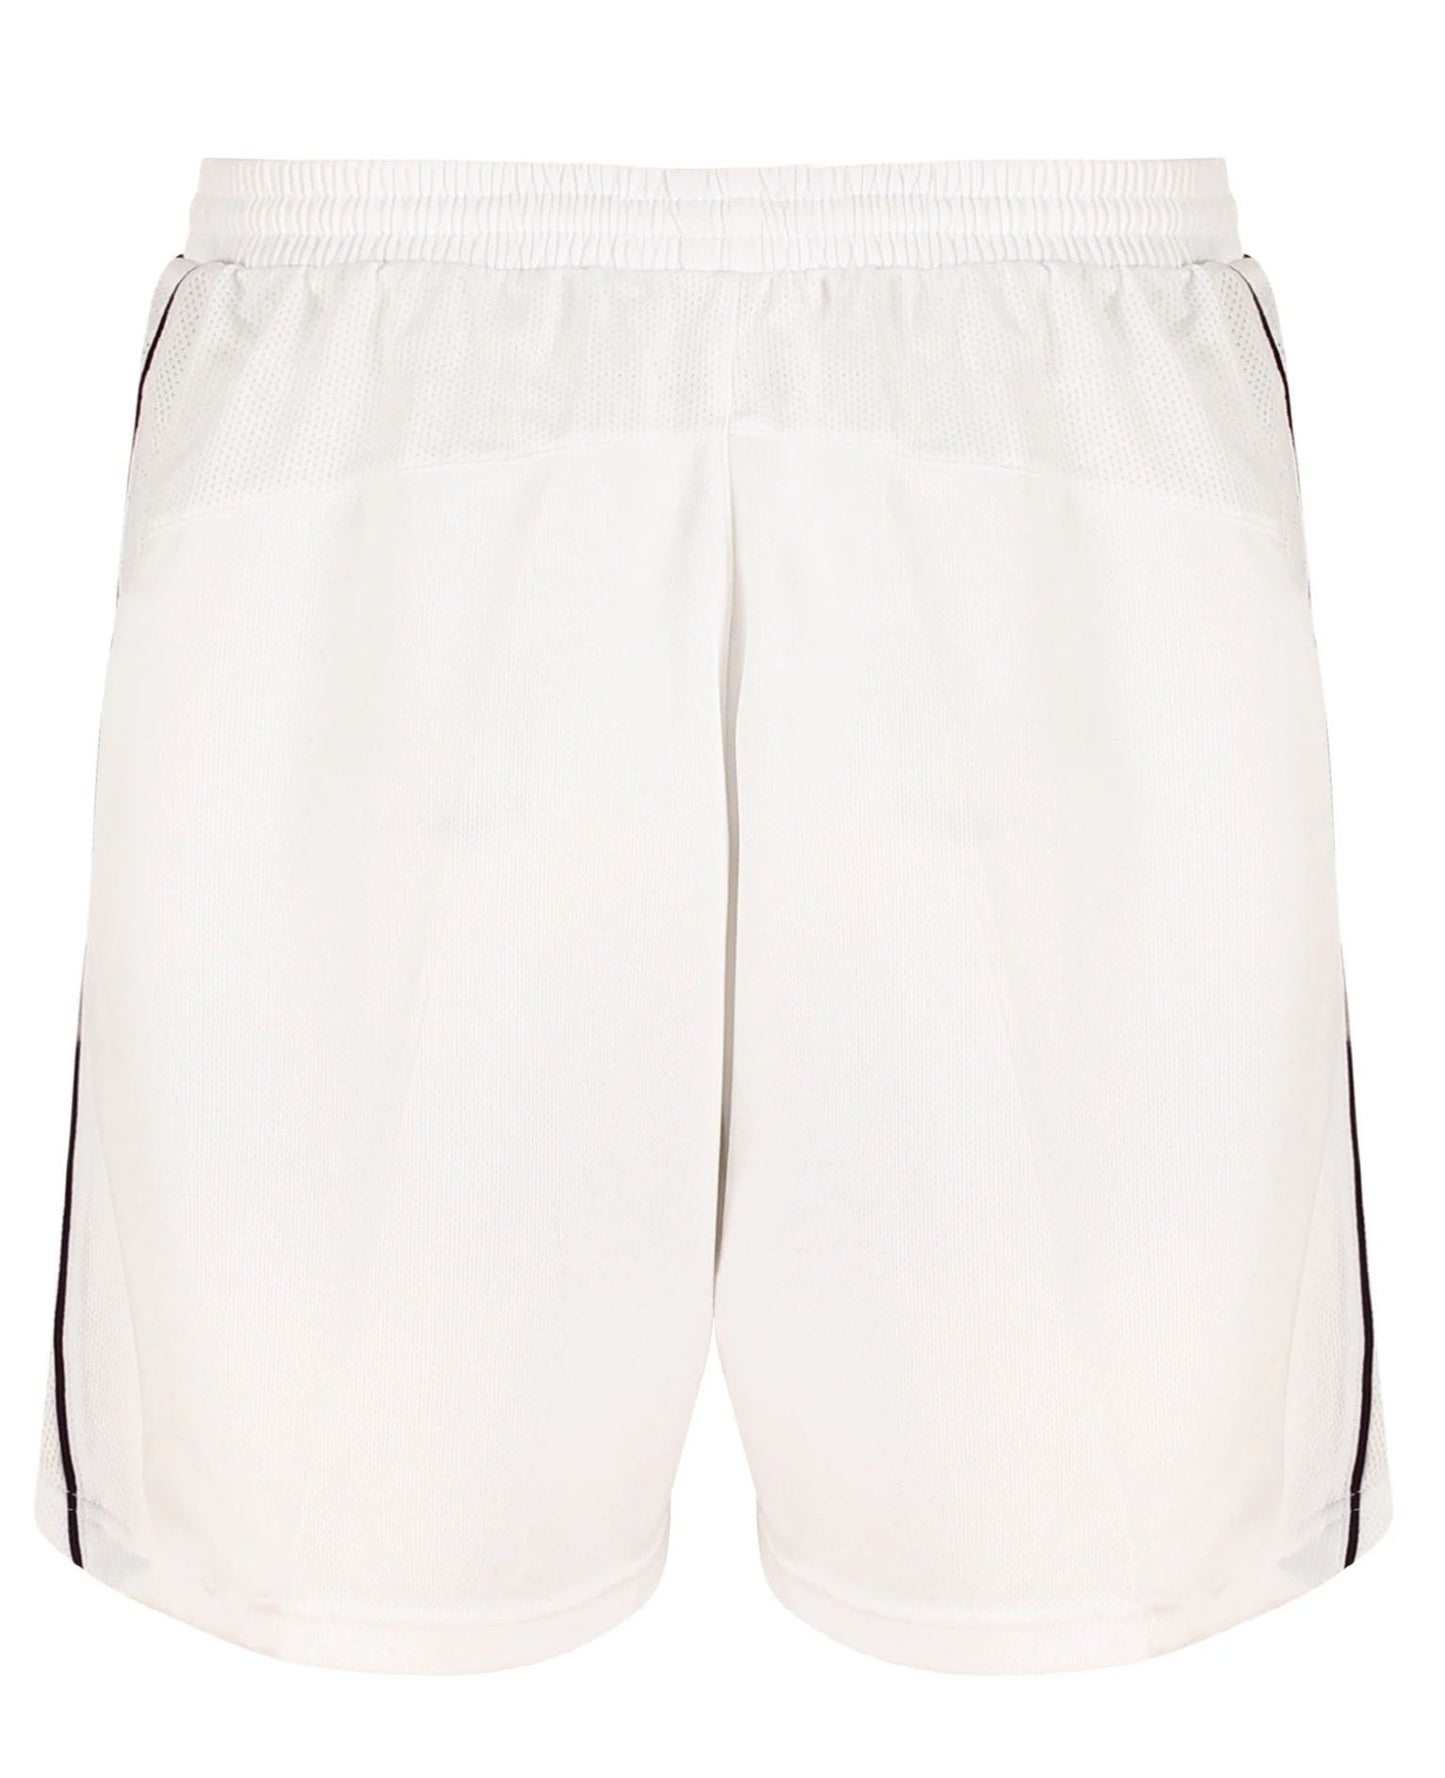 Barca Mesh Shorts - White